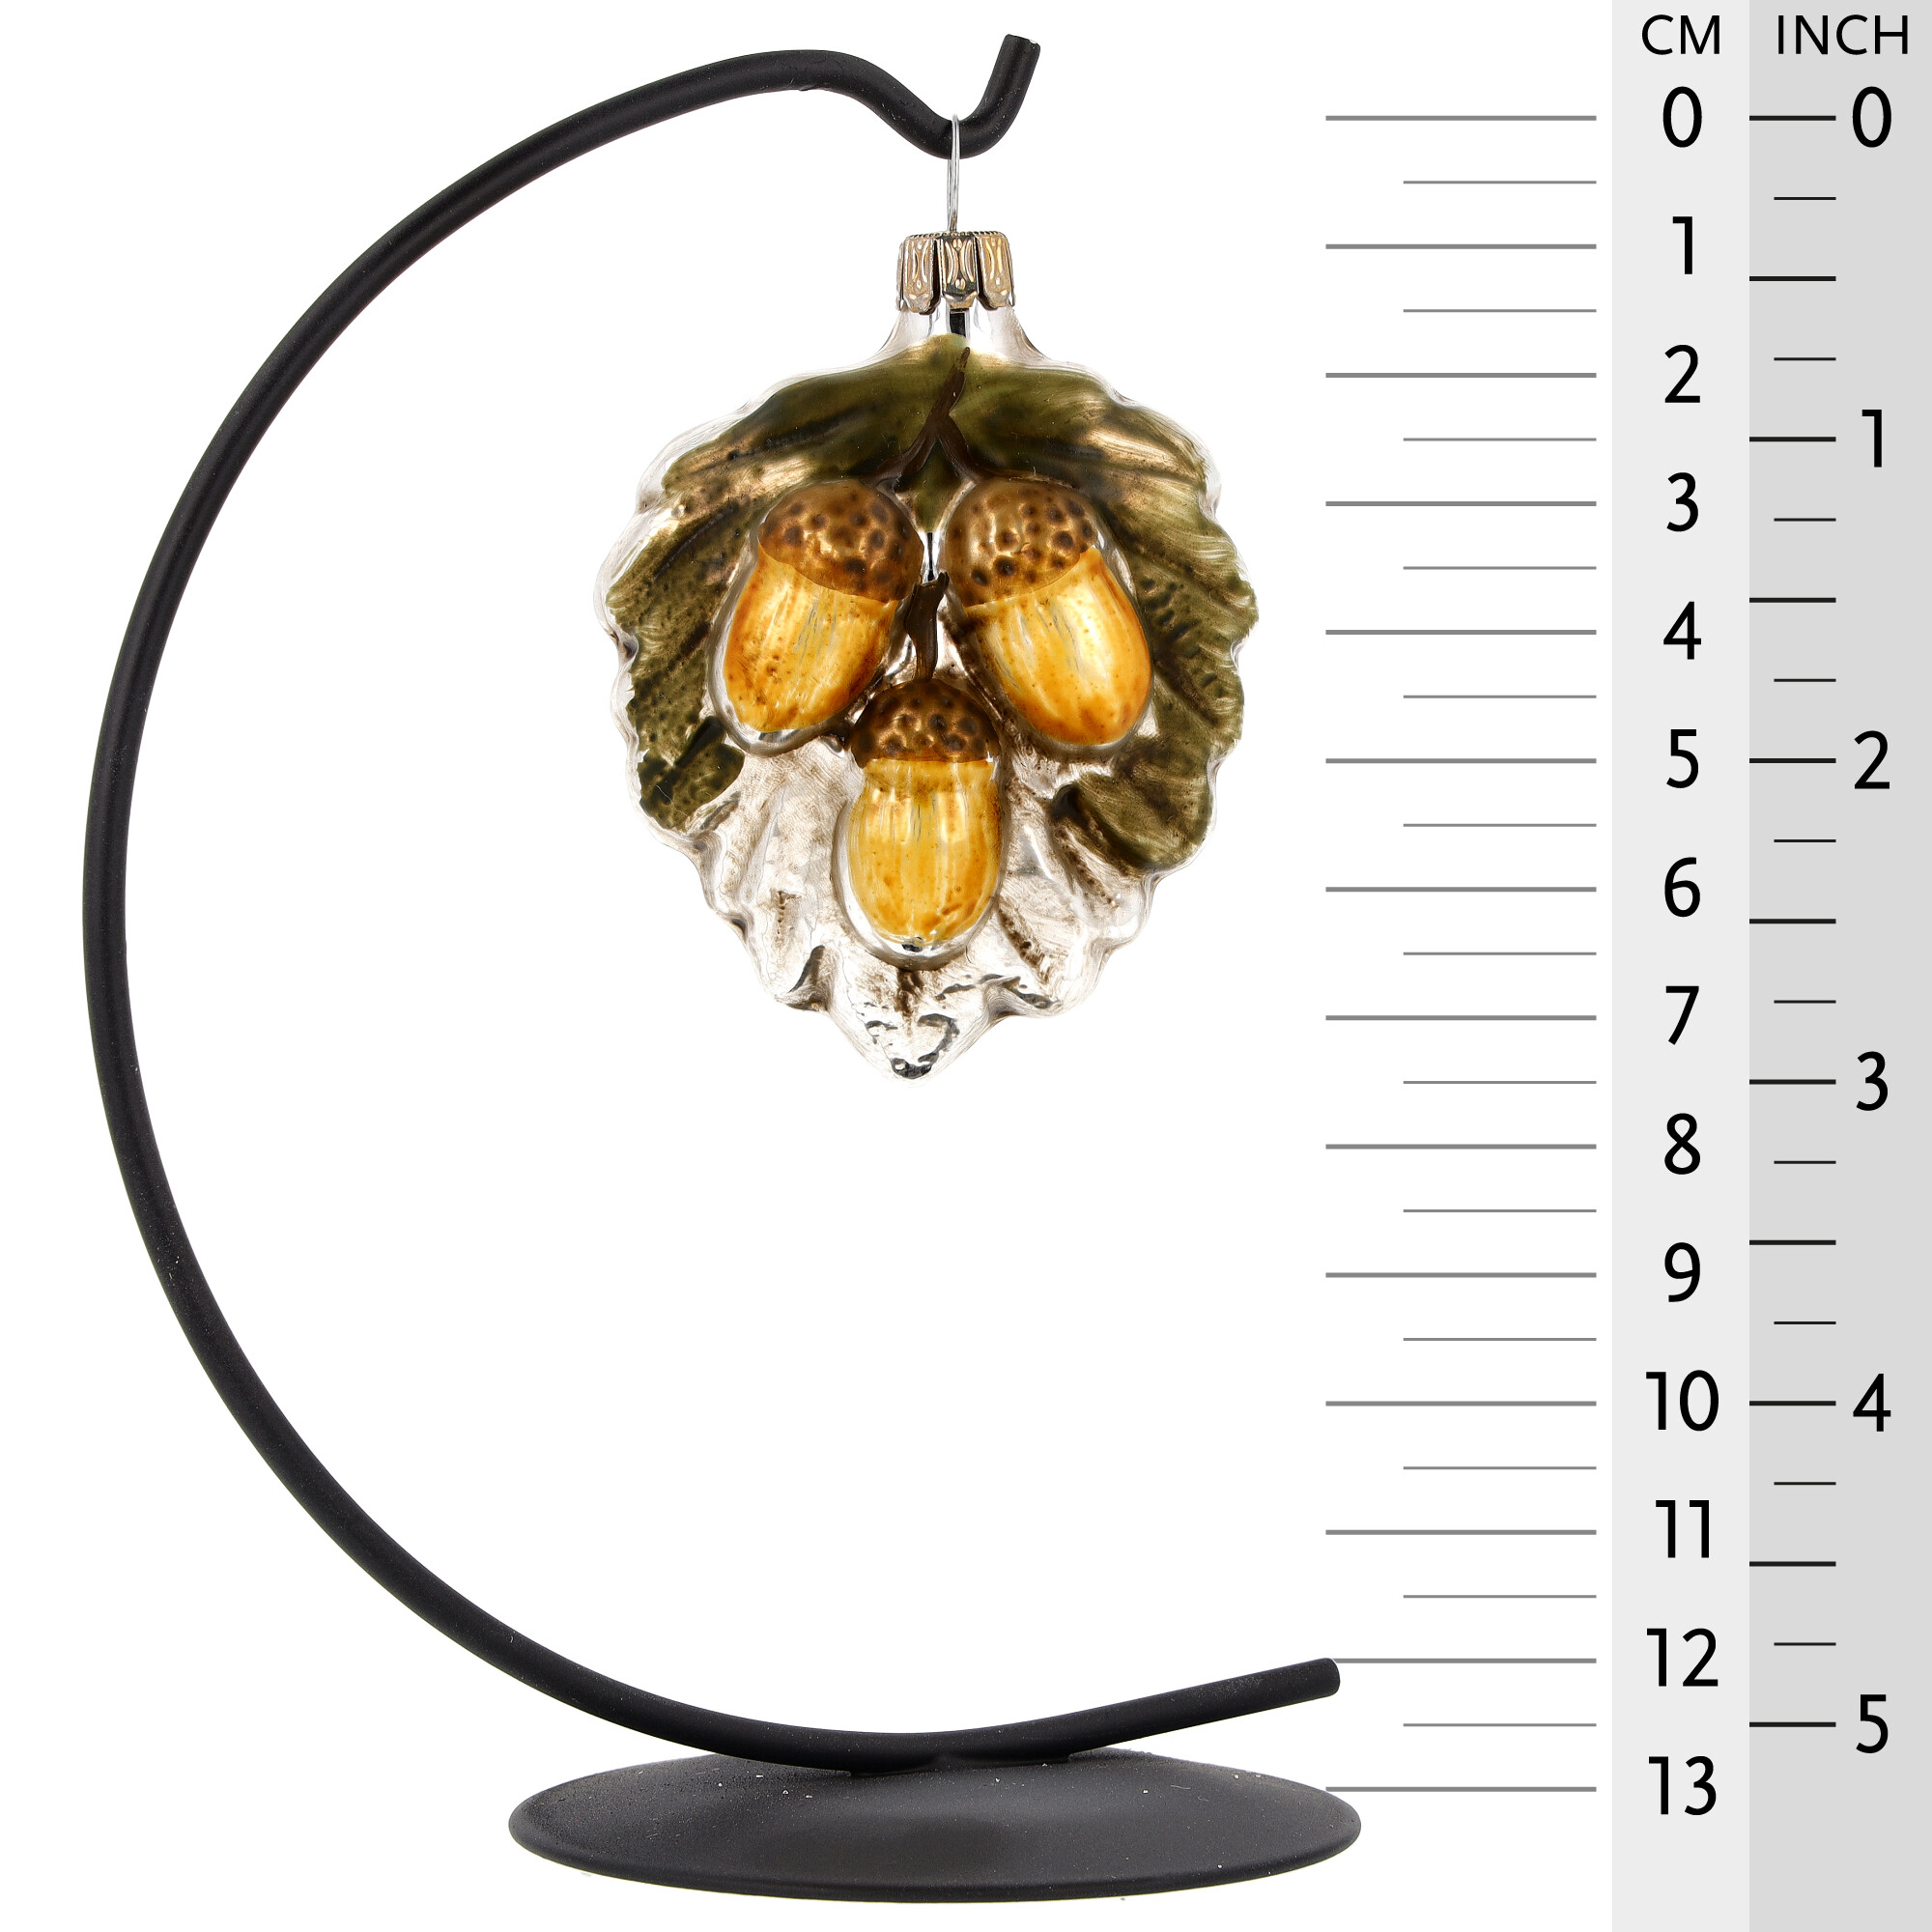 Retro Vintage style Christmas Glass Ornament - Oak leaf with acorns